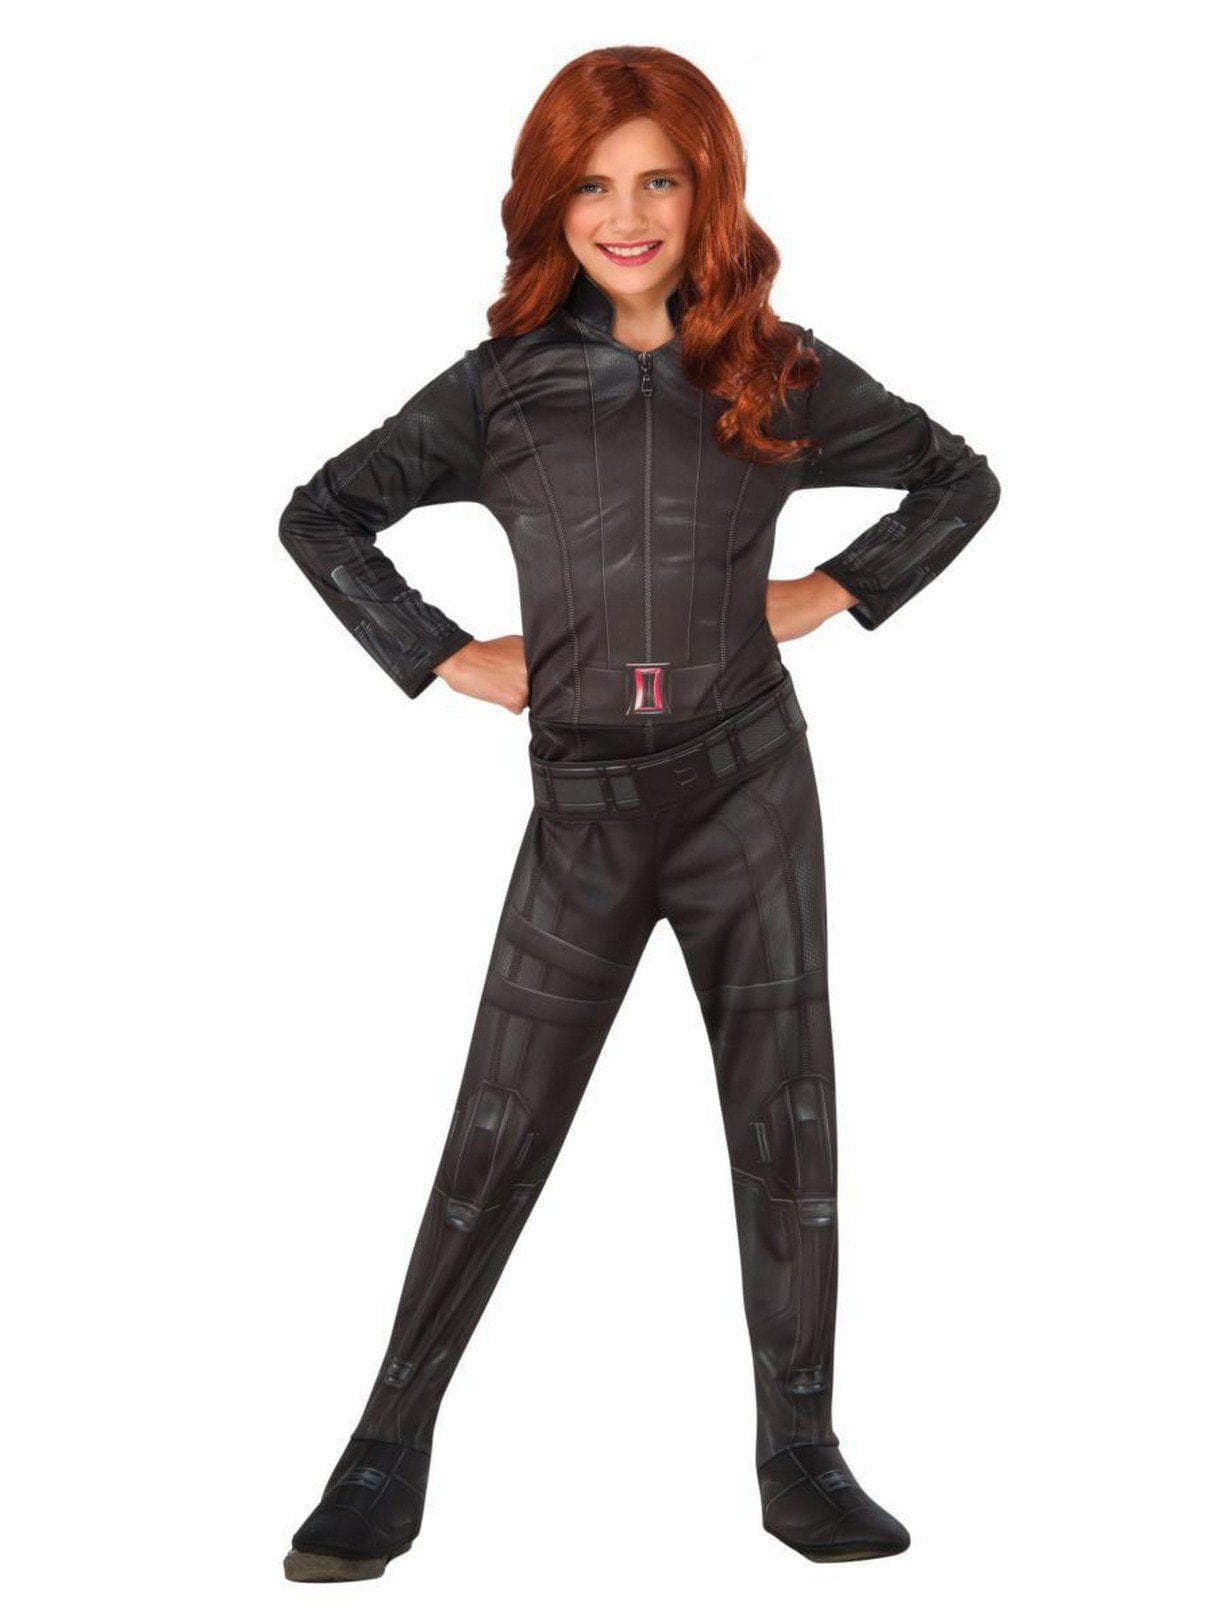 Kids Avengers Black Widow Costume - costumes.com